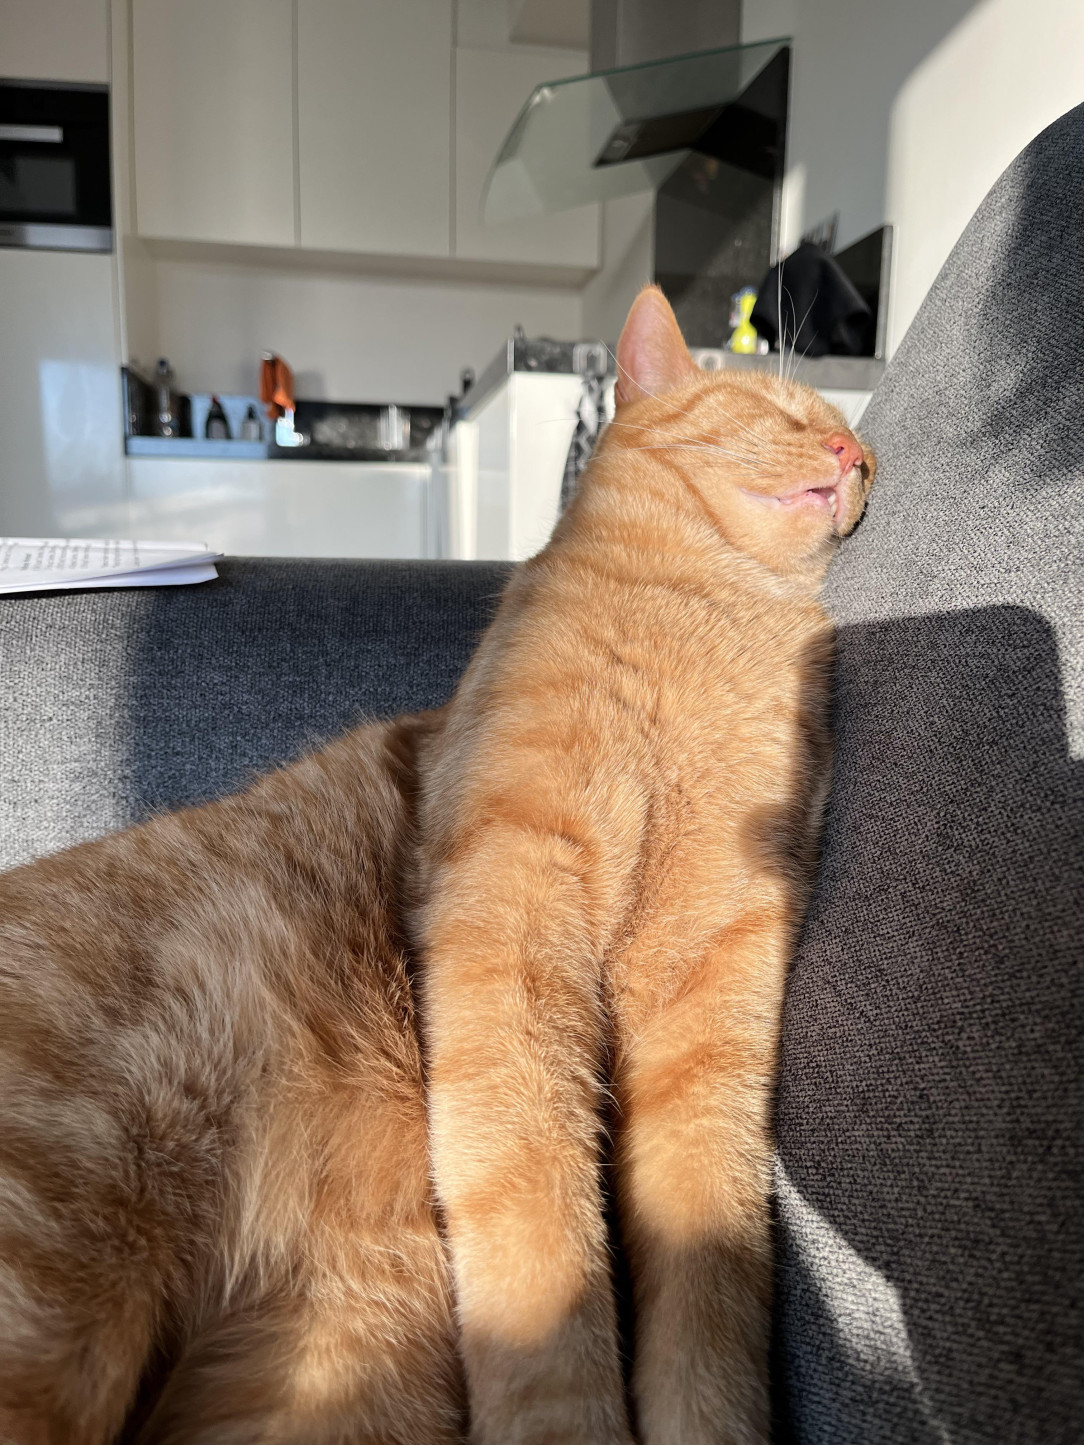 Felix after an exhausssssting day of catching sunbeams